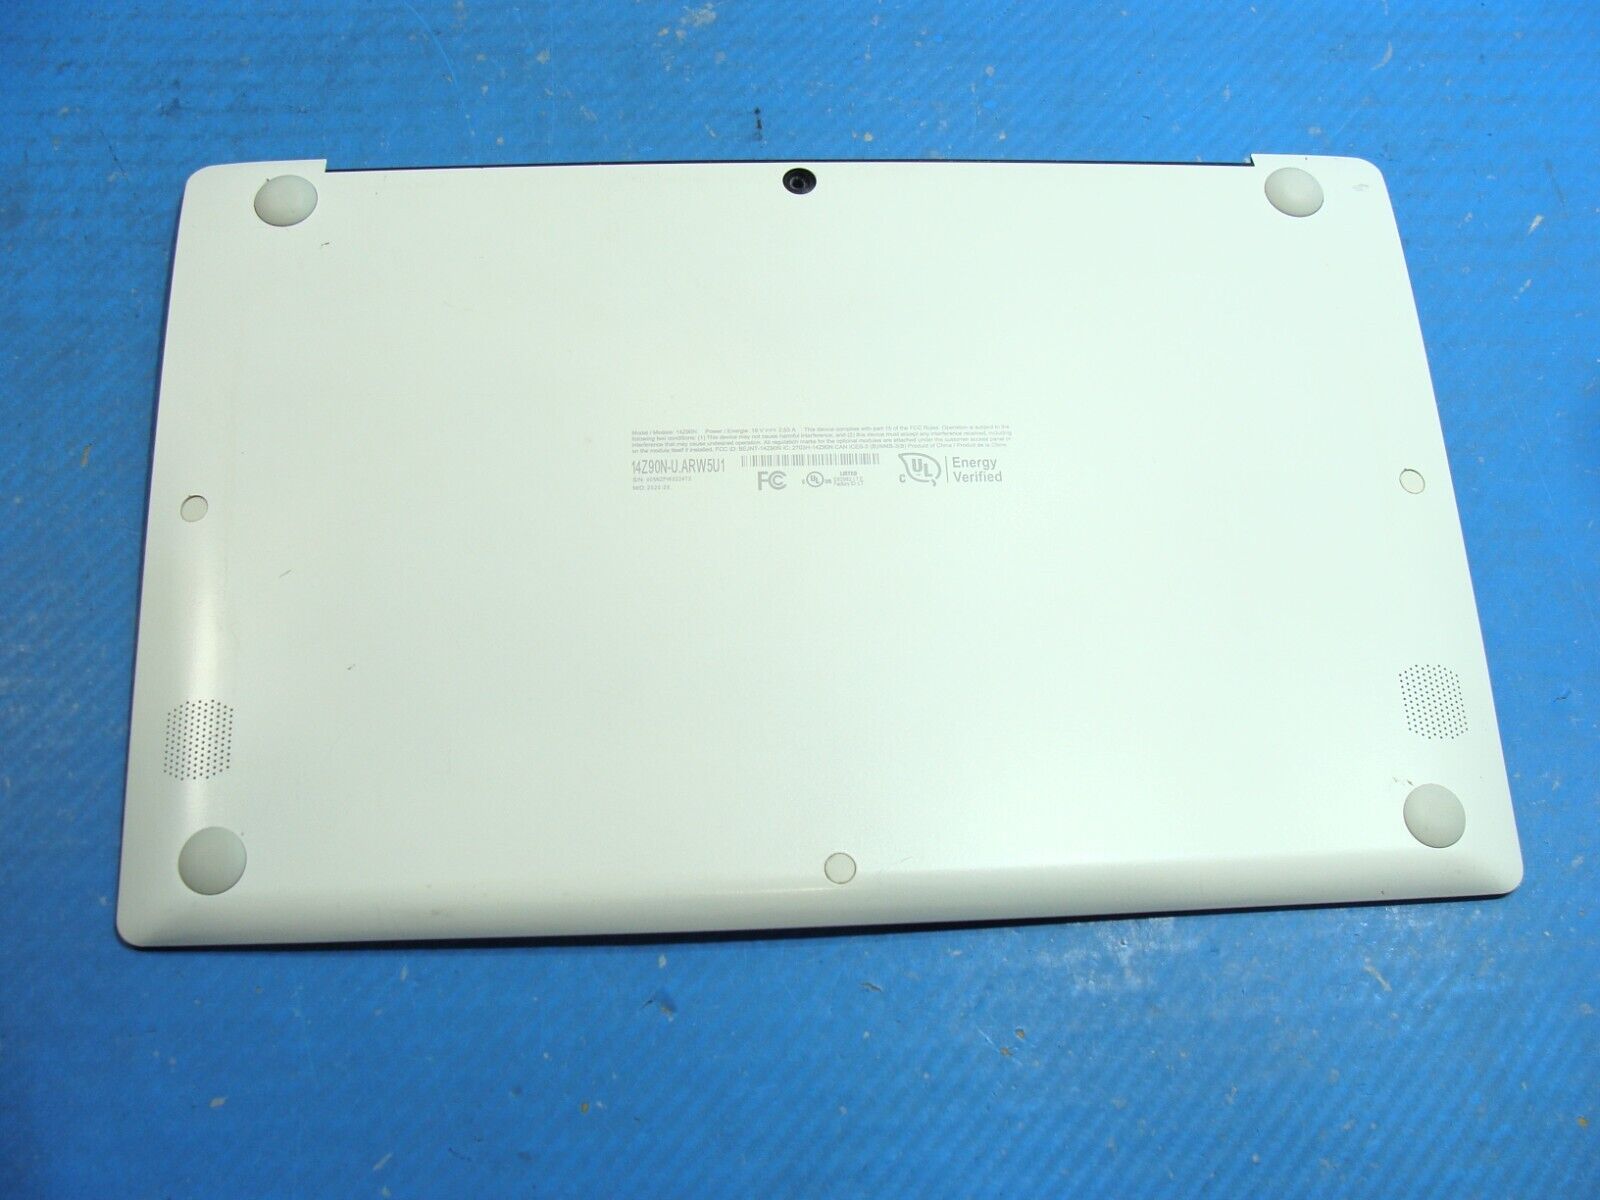 LG Gram 14” 14Z90N-U.ARW5U1 Genuine Laptop Bottom Case Base Cover White